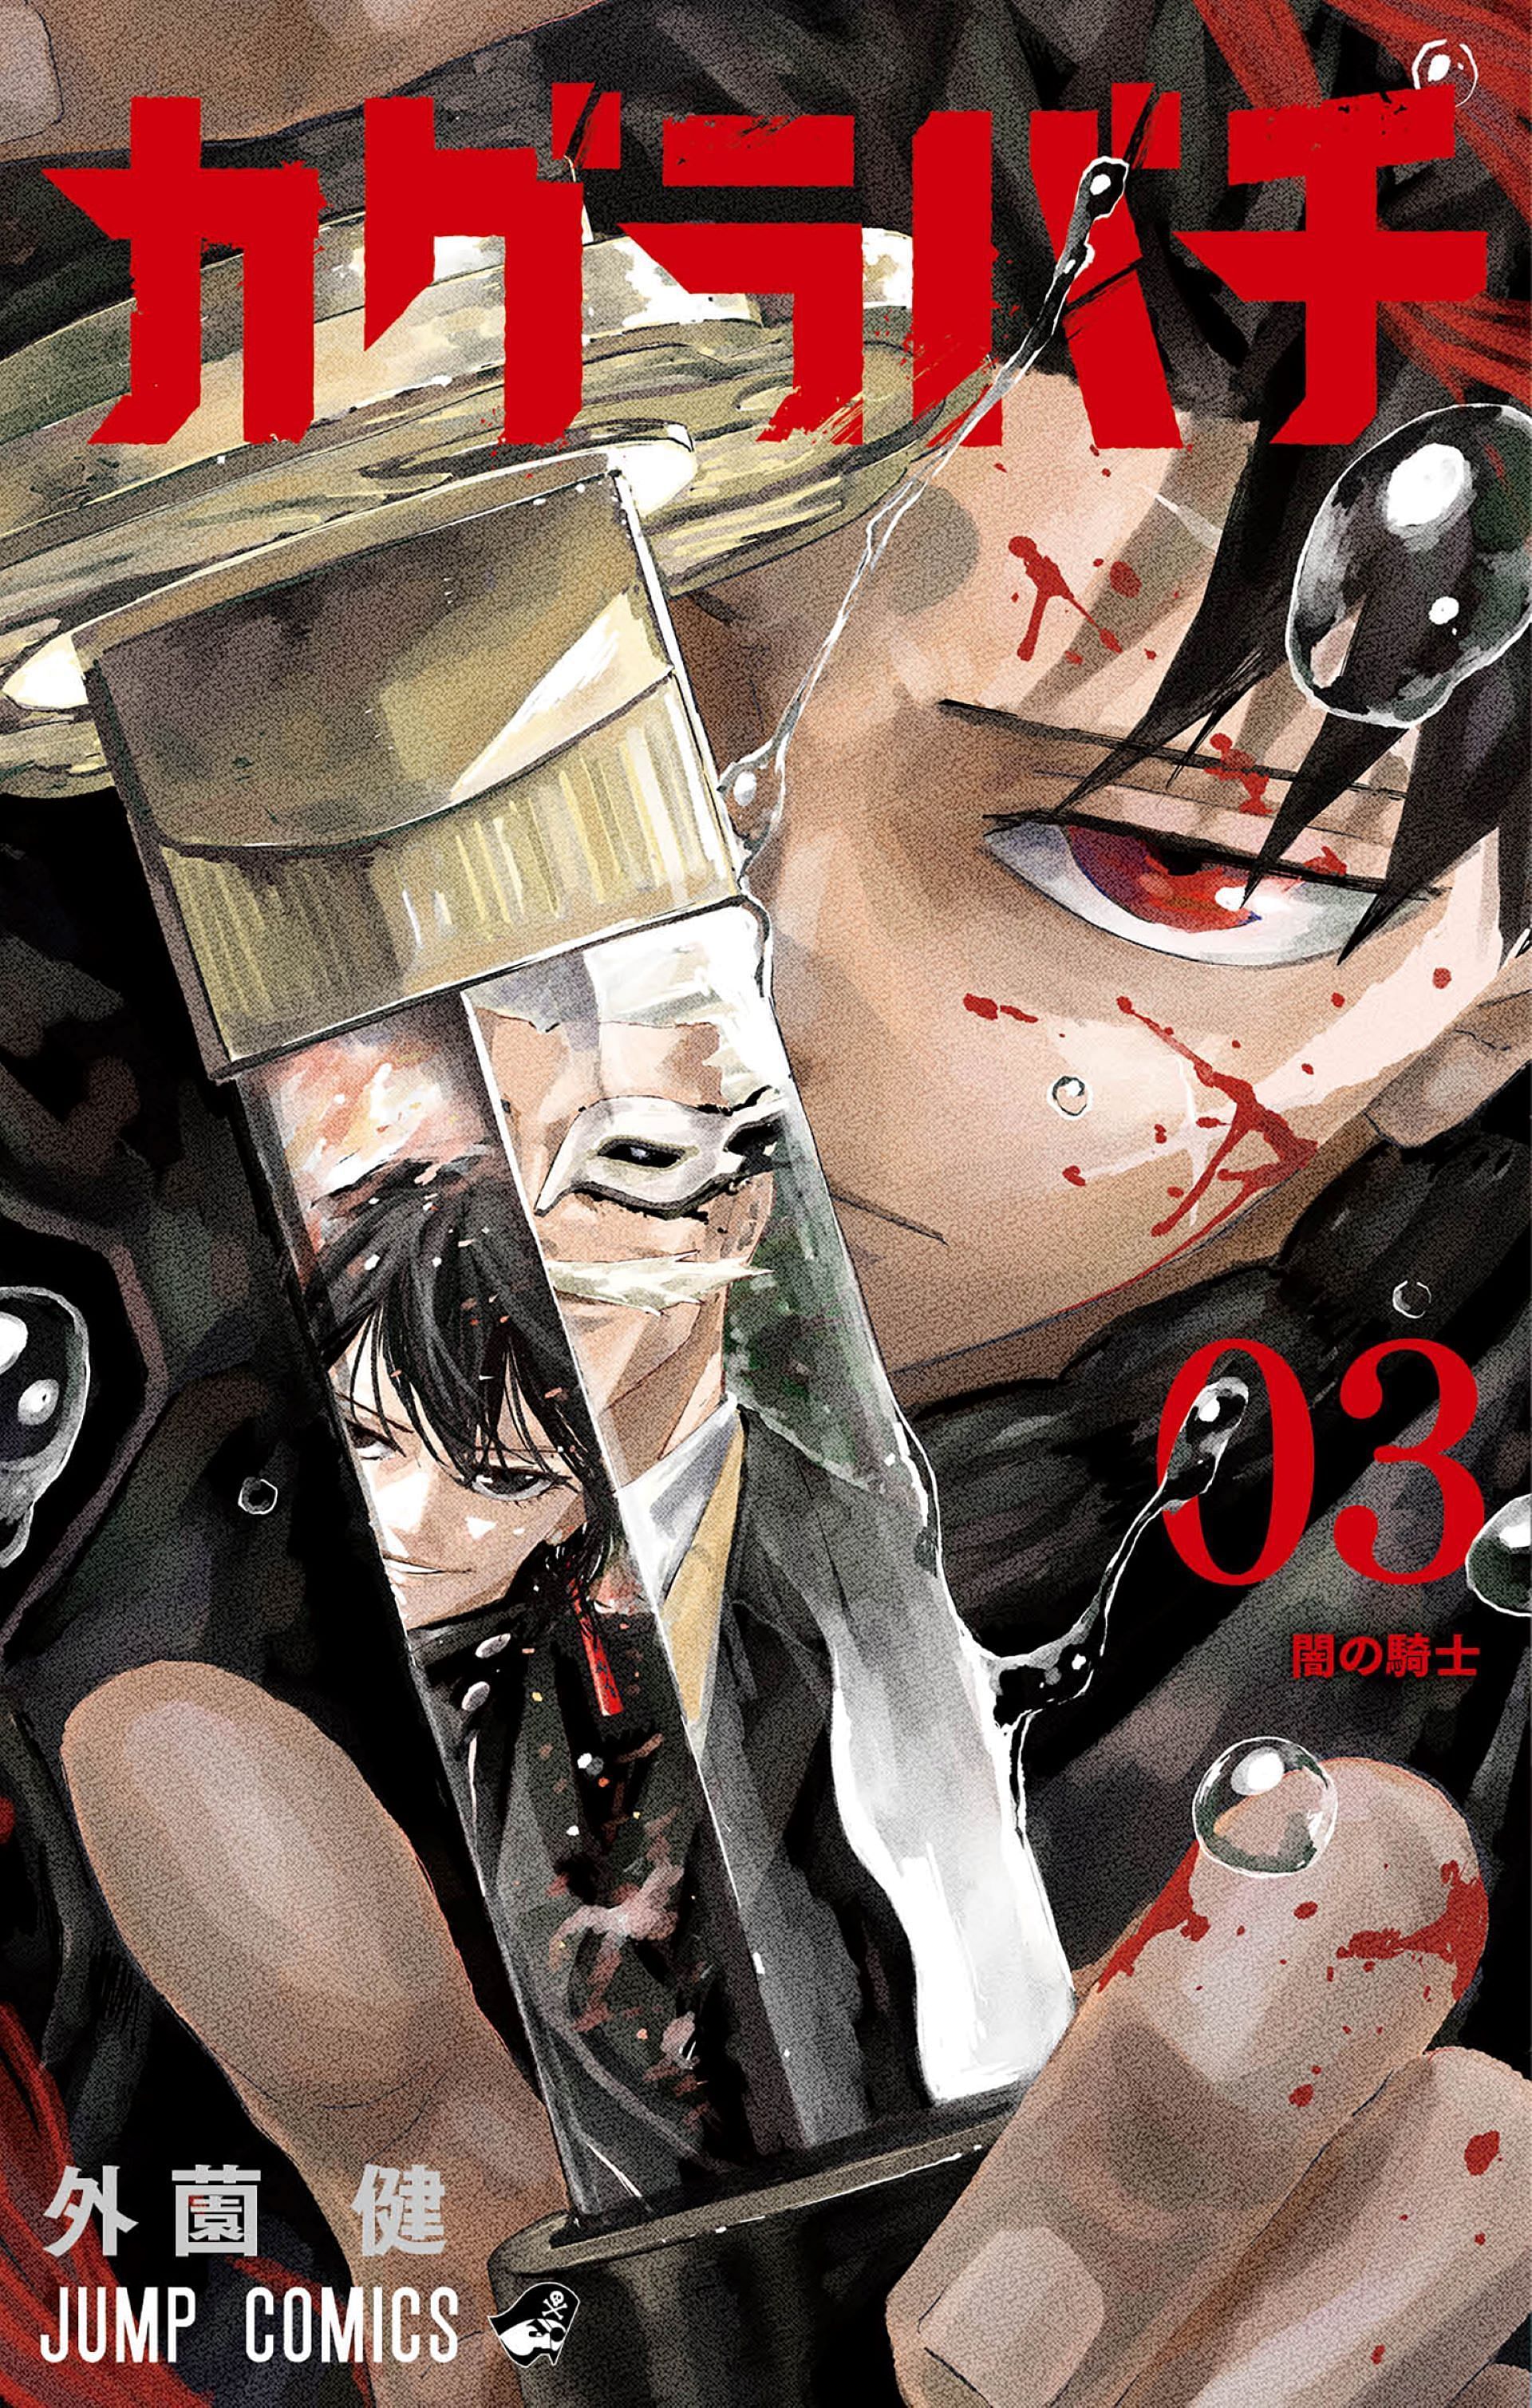 The cover illustration for Volume 3 (Image via Takeru Hokazono/Shueisha)